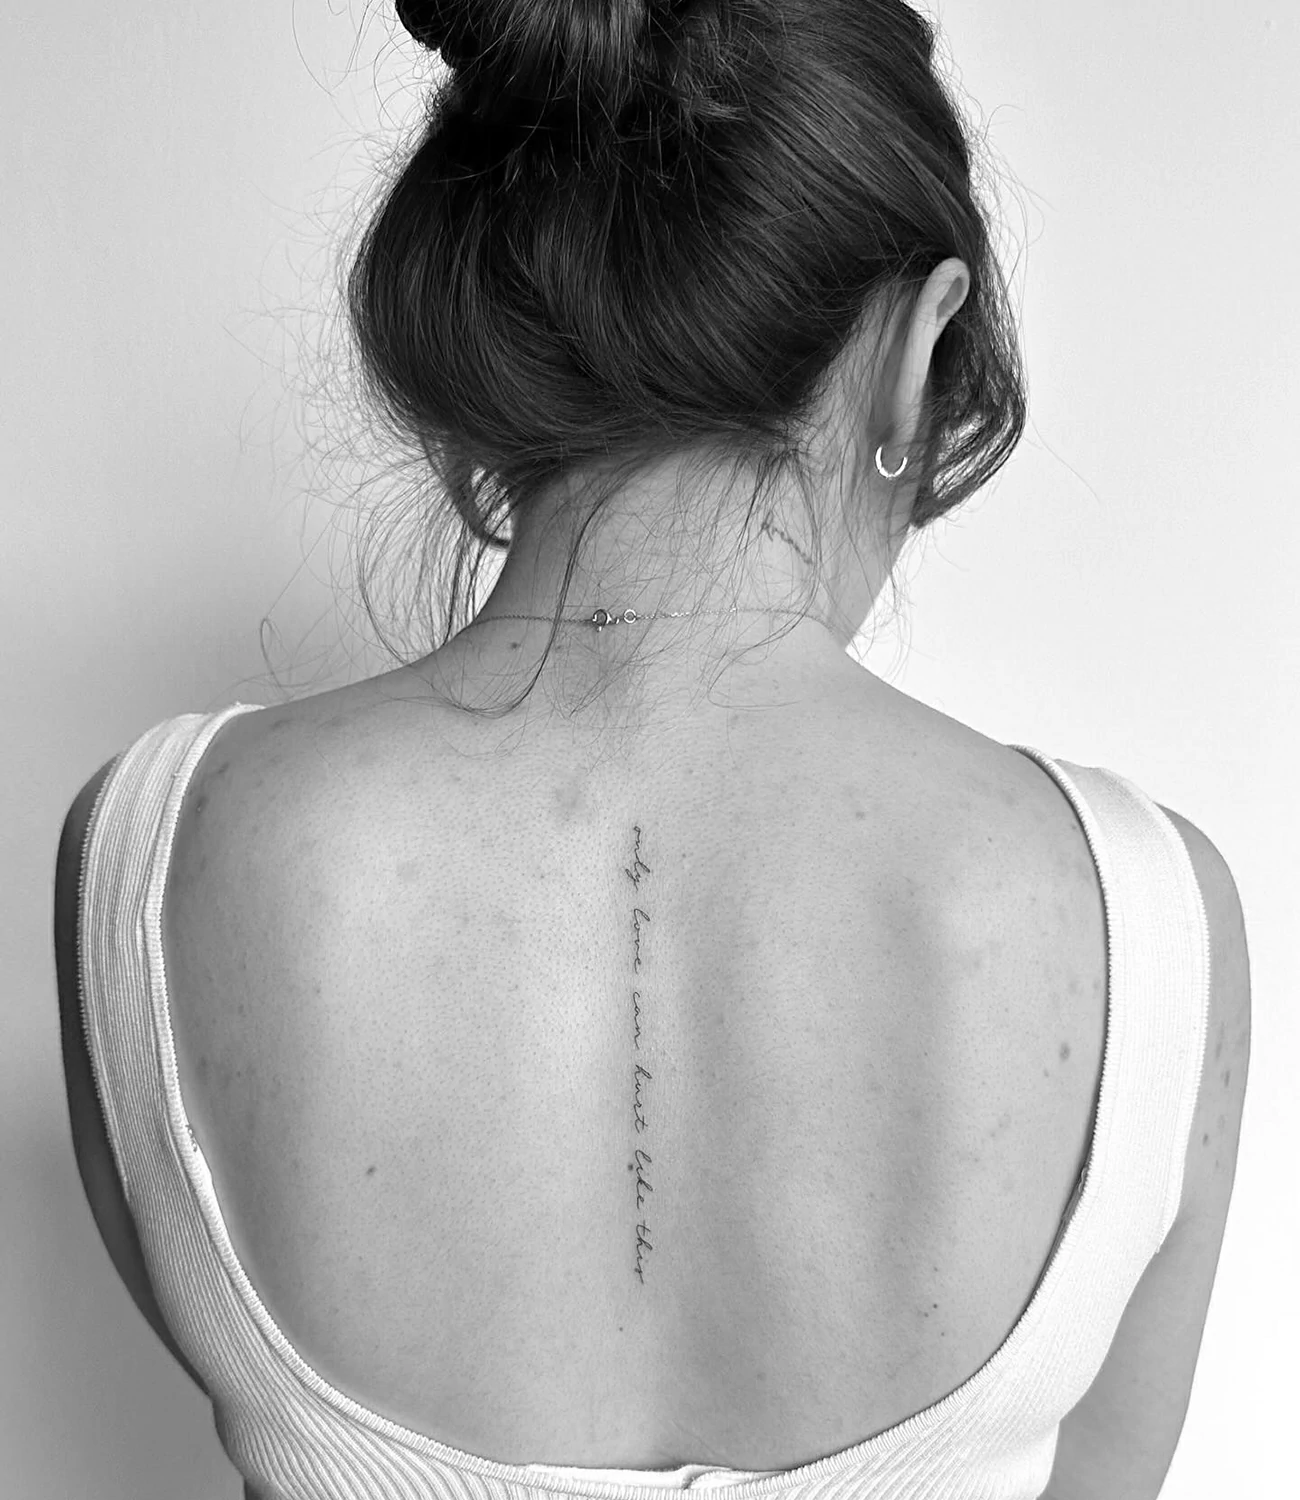 spine tattoos